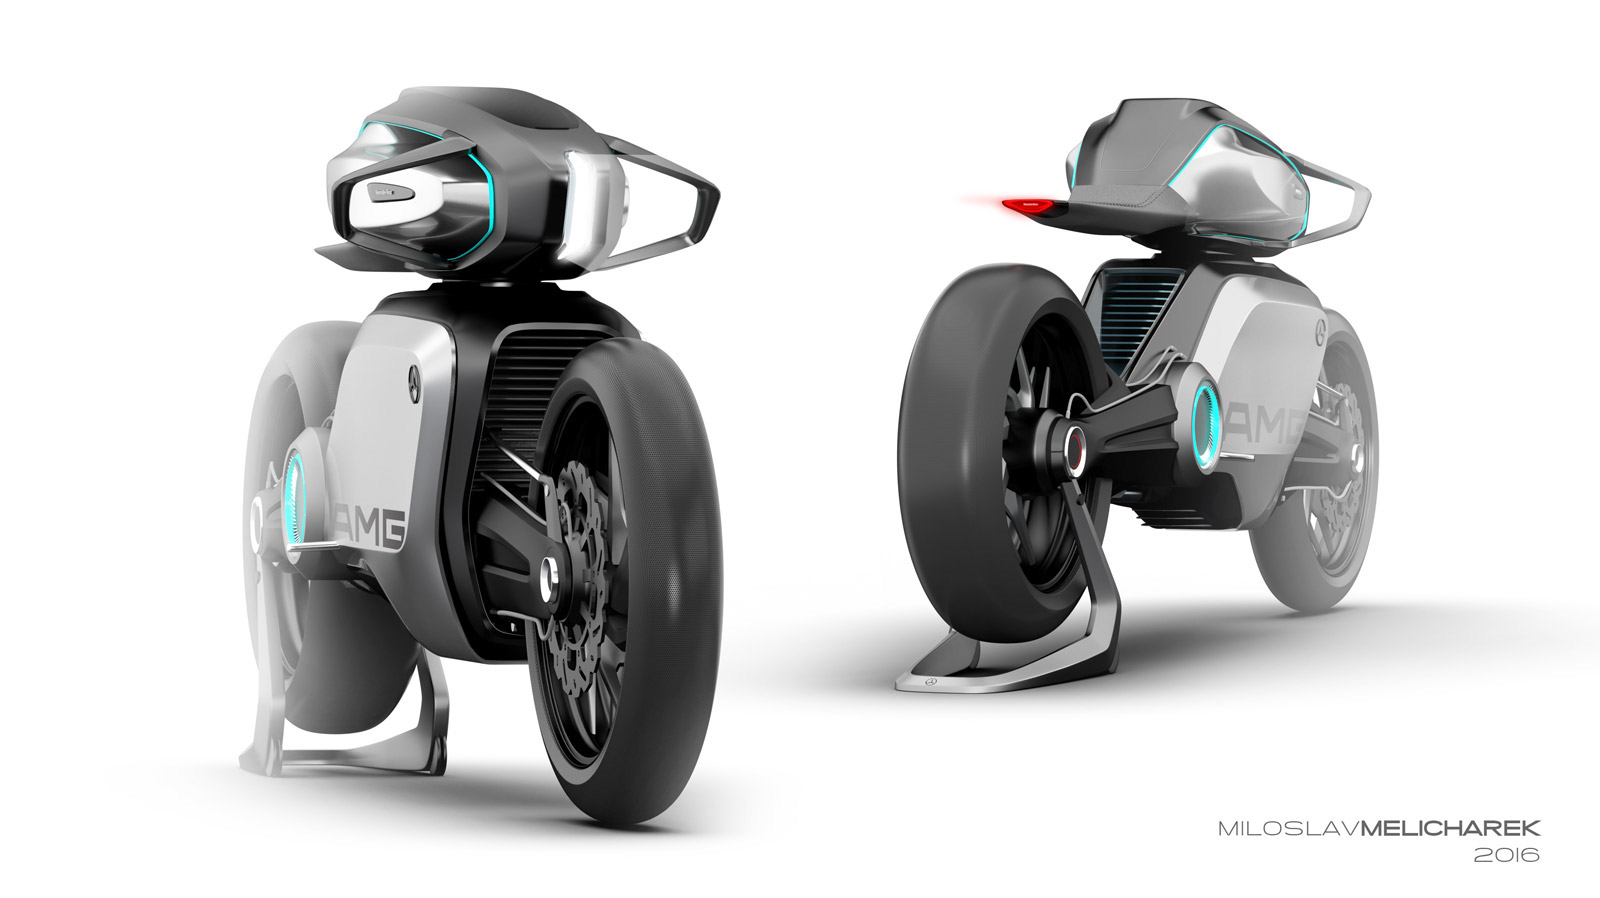 Mercedes Benz AMG Motorcycle - VISION M01 - design by MMelicharek_01